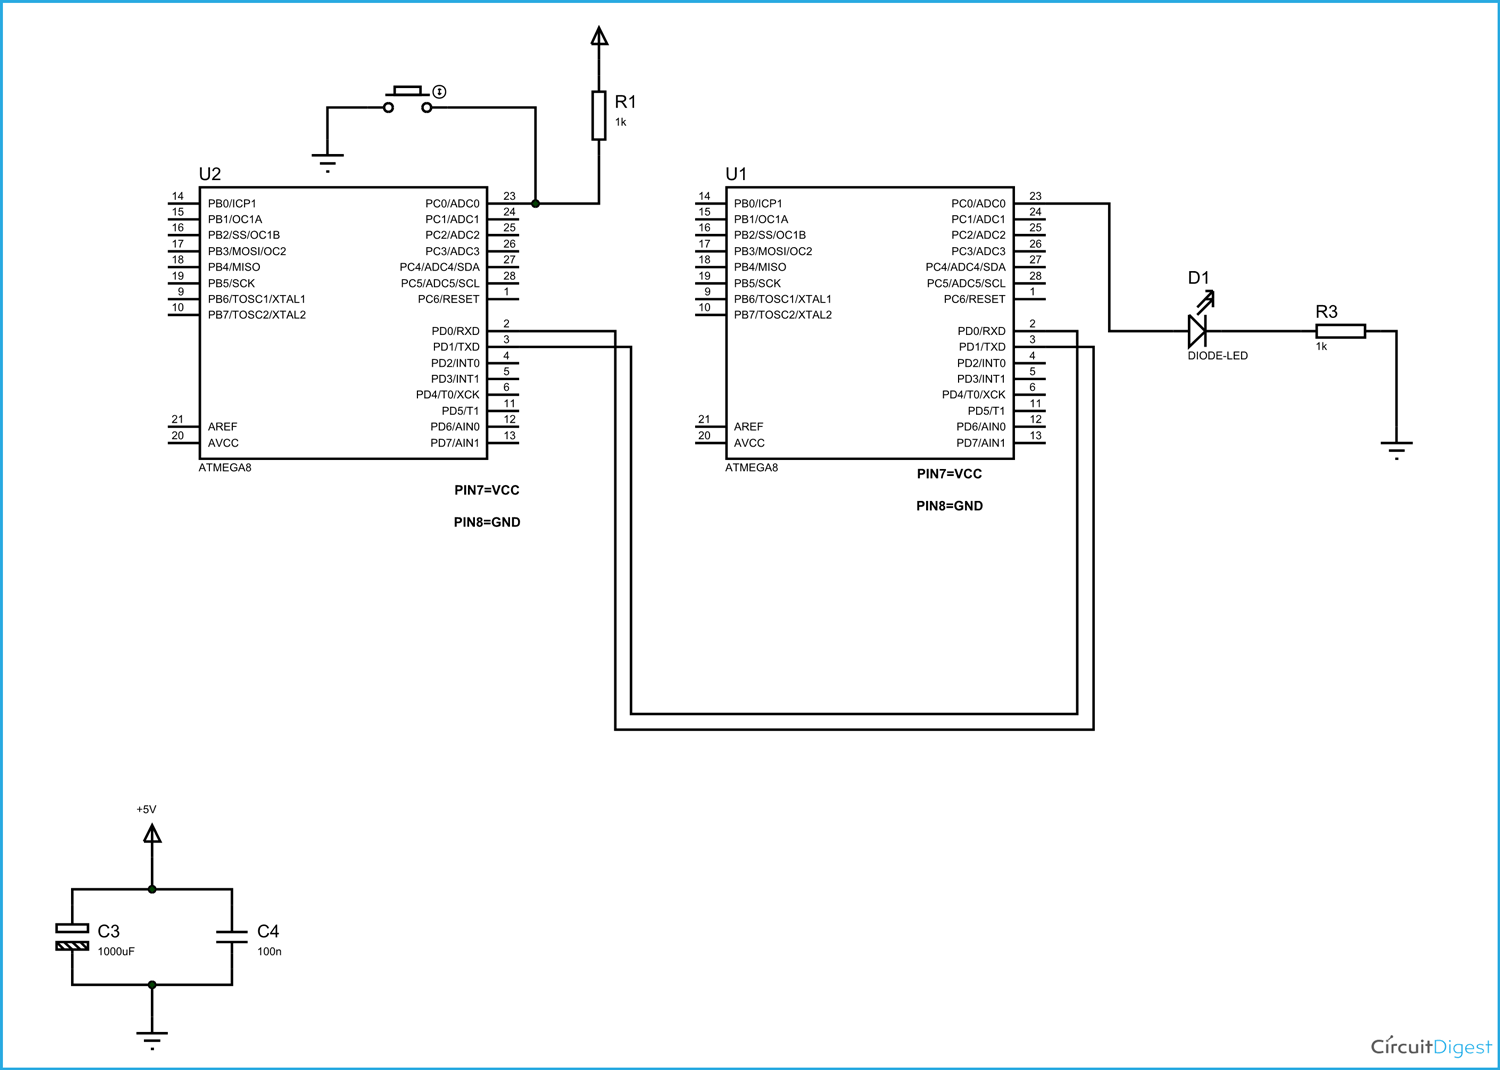 Circuit Diagram for UART Communication between two ATmega8 Microcontrollers